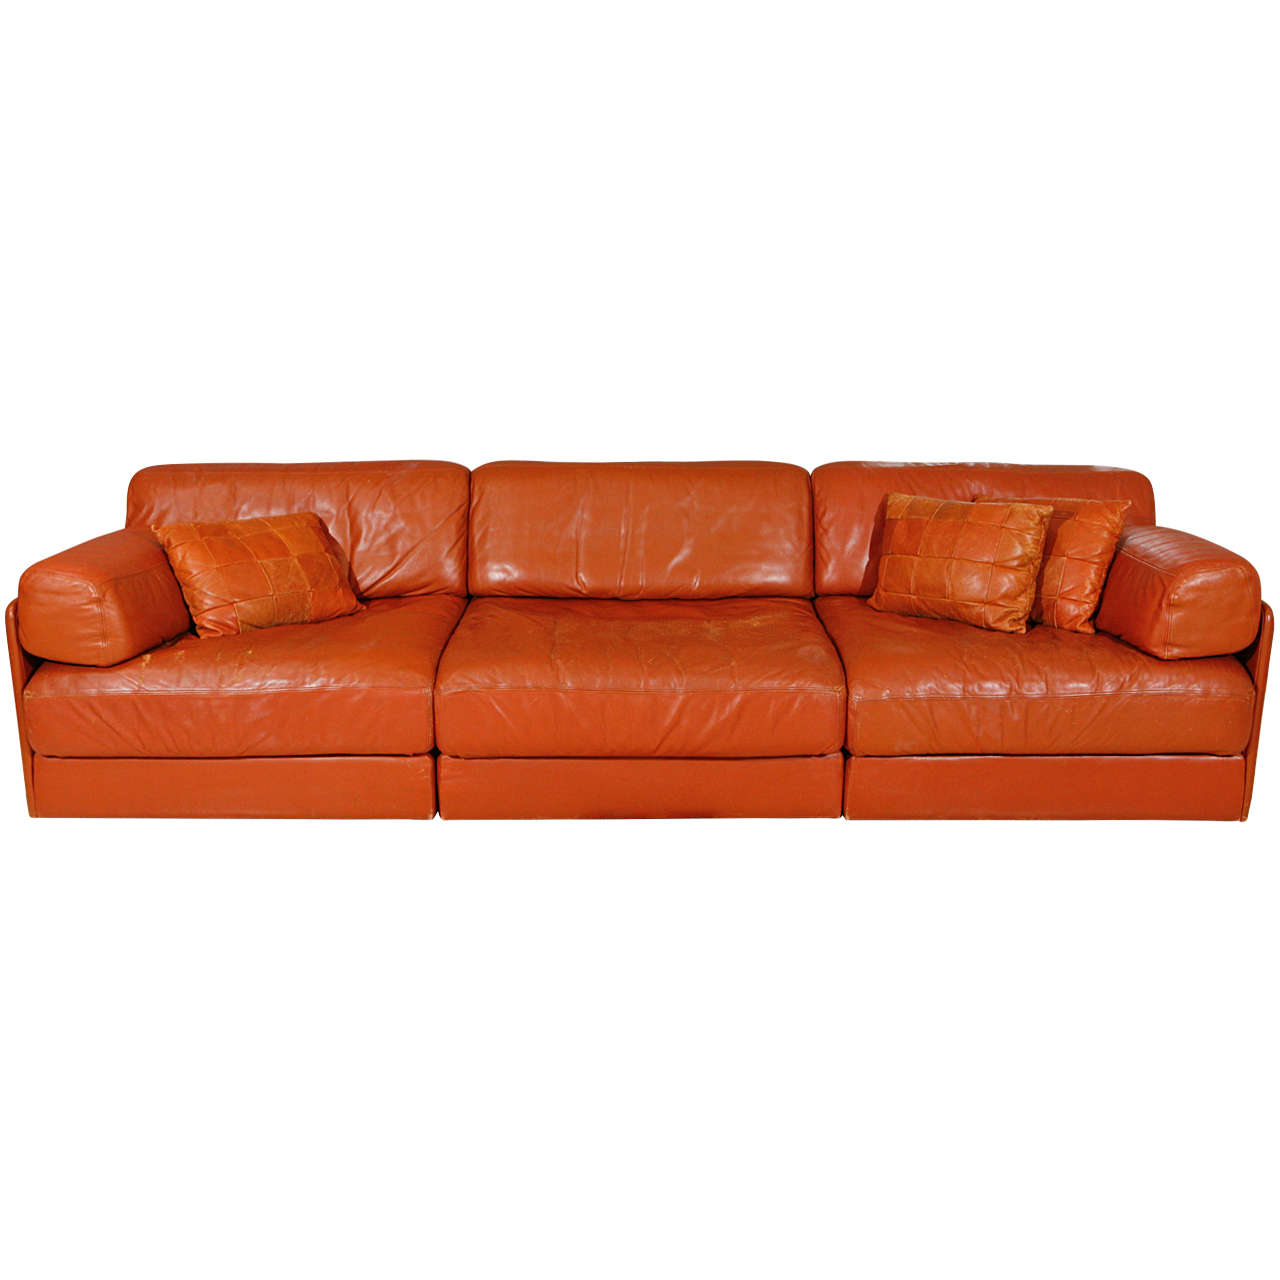 Modular Leather Sleeper Sofa by De Sede